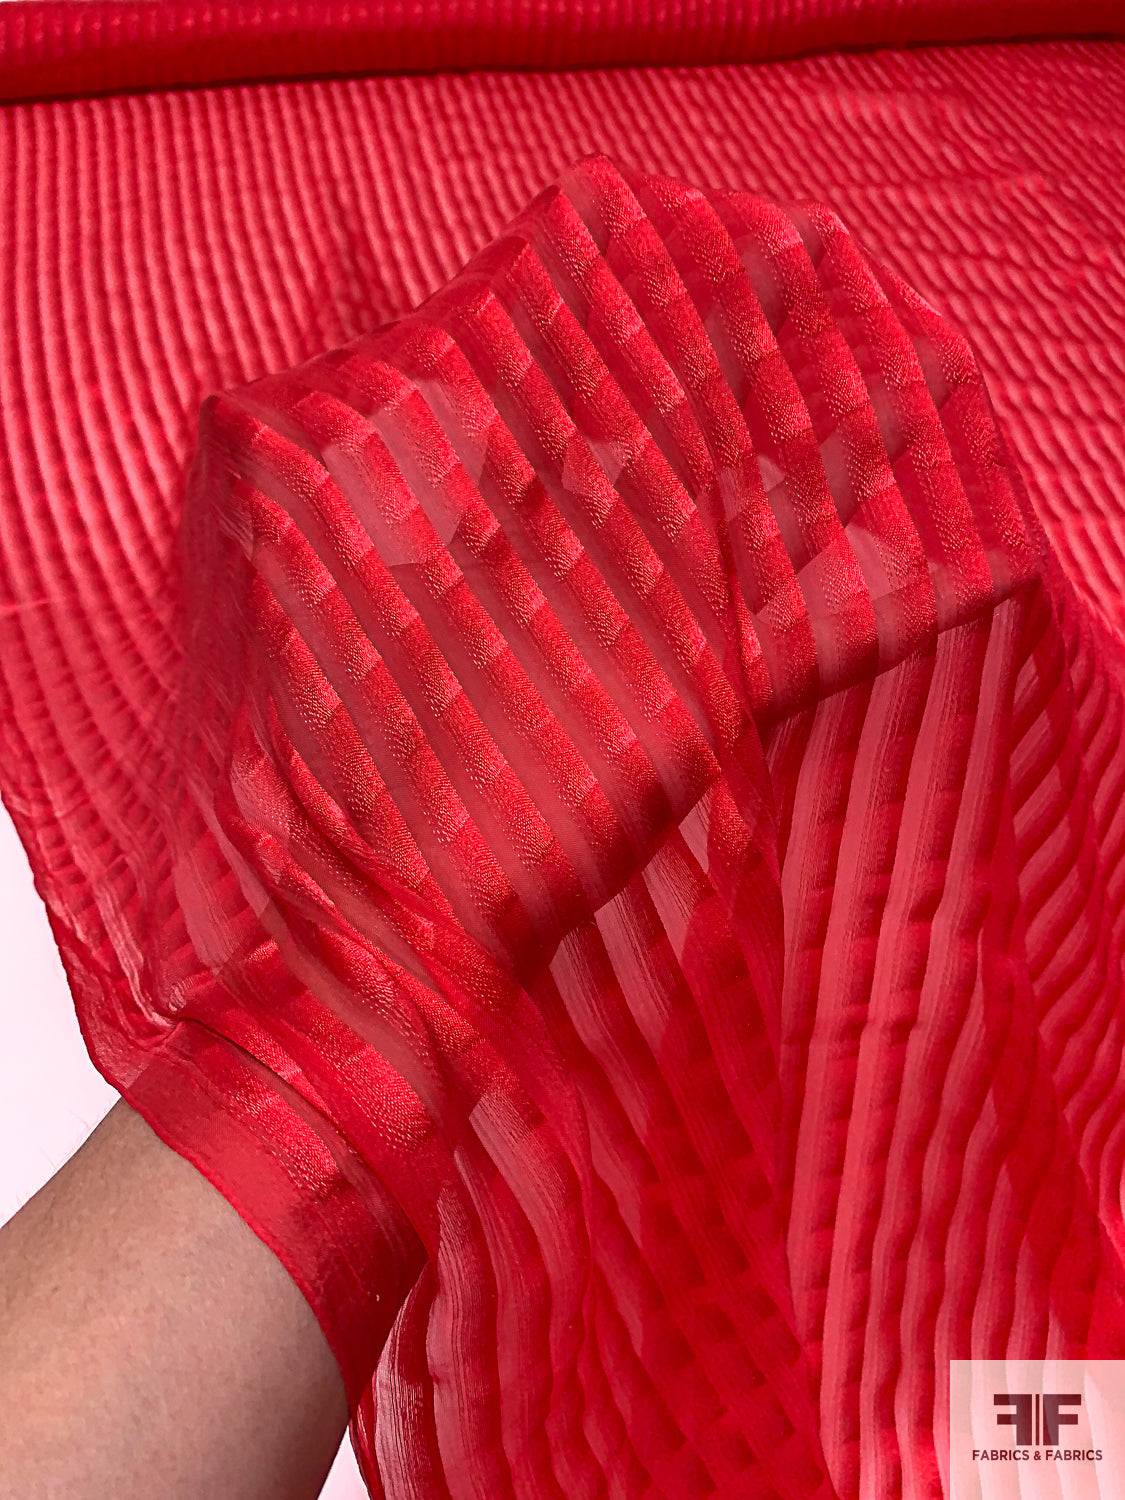 Vertical Jacquard Striped Silk Chiffon - Red